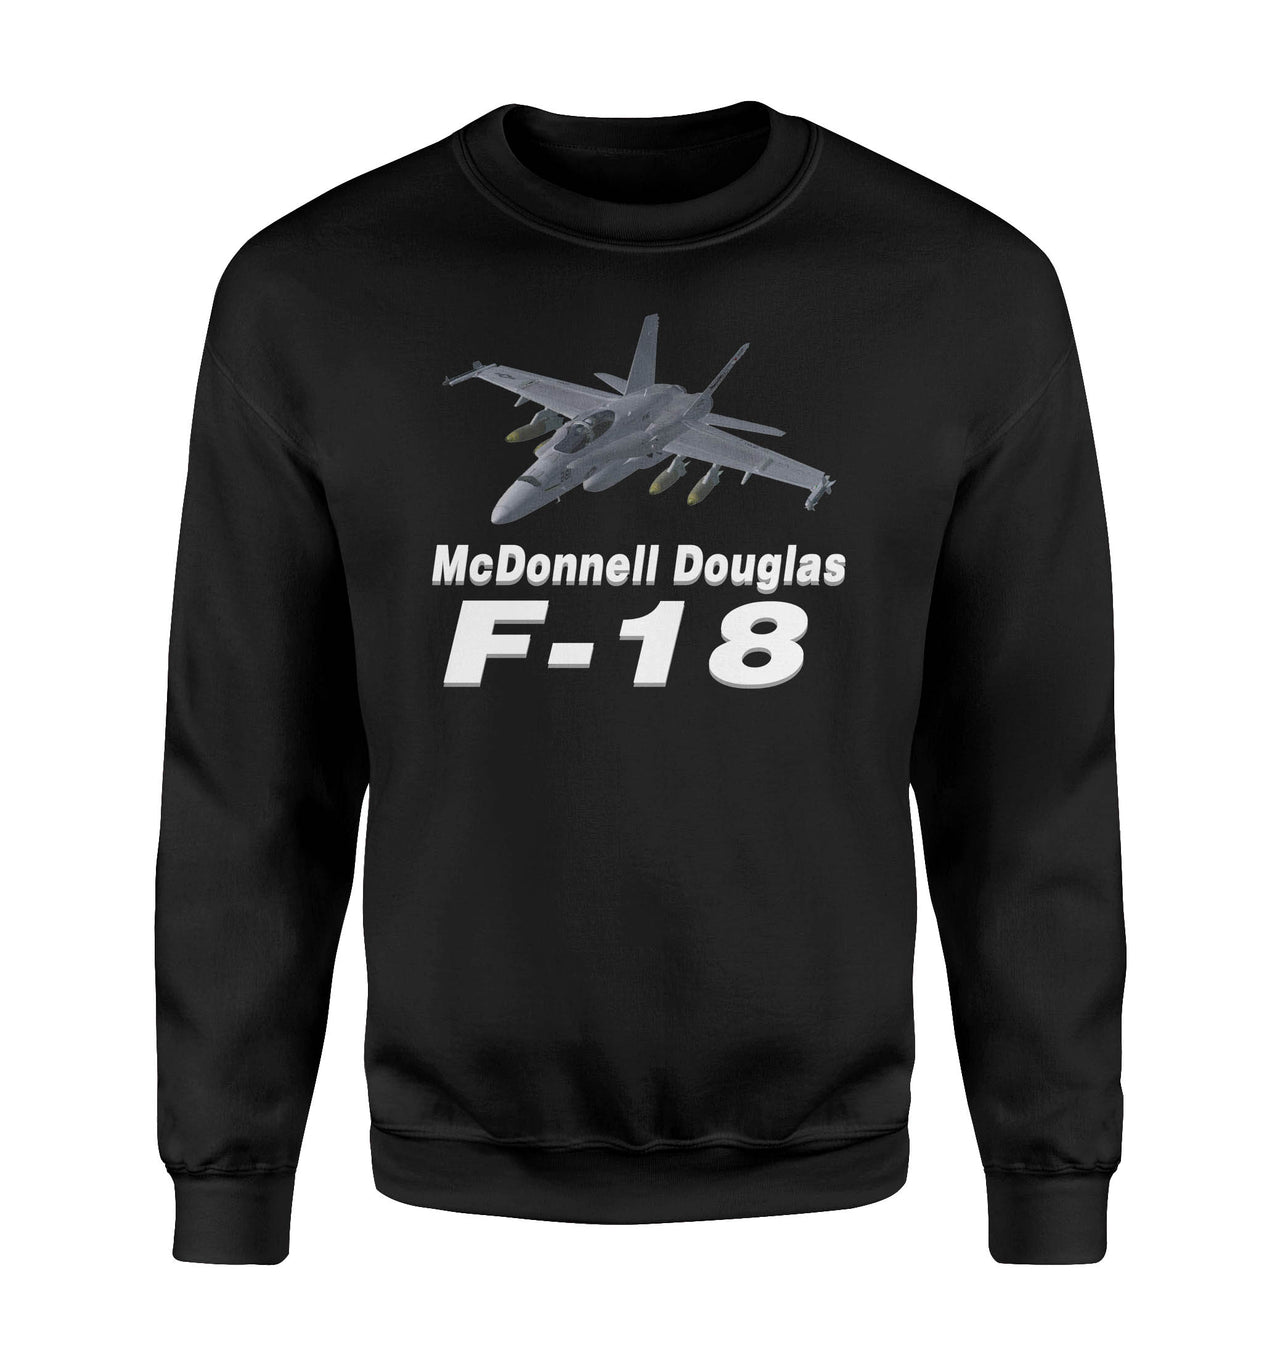 The McDonnell Douglas F18 Designed Sweatshirts